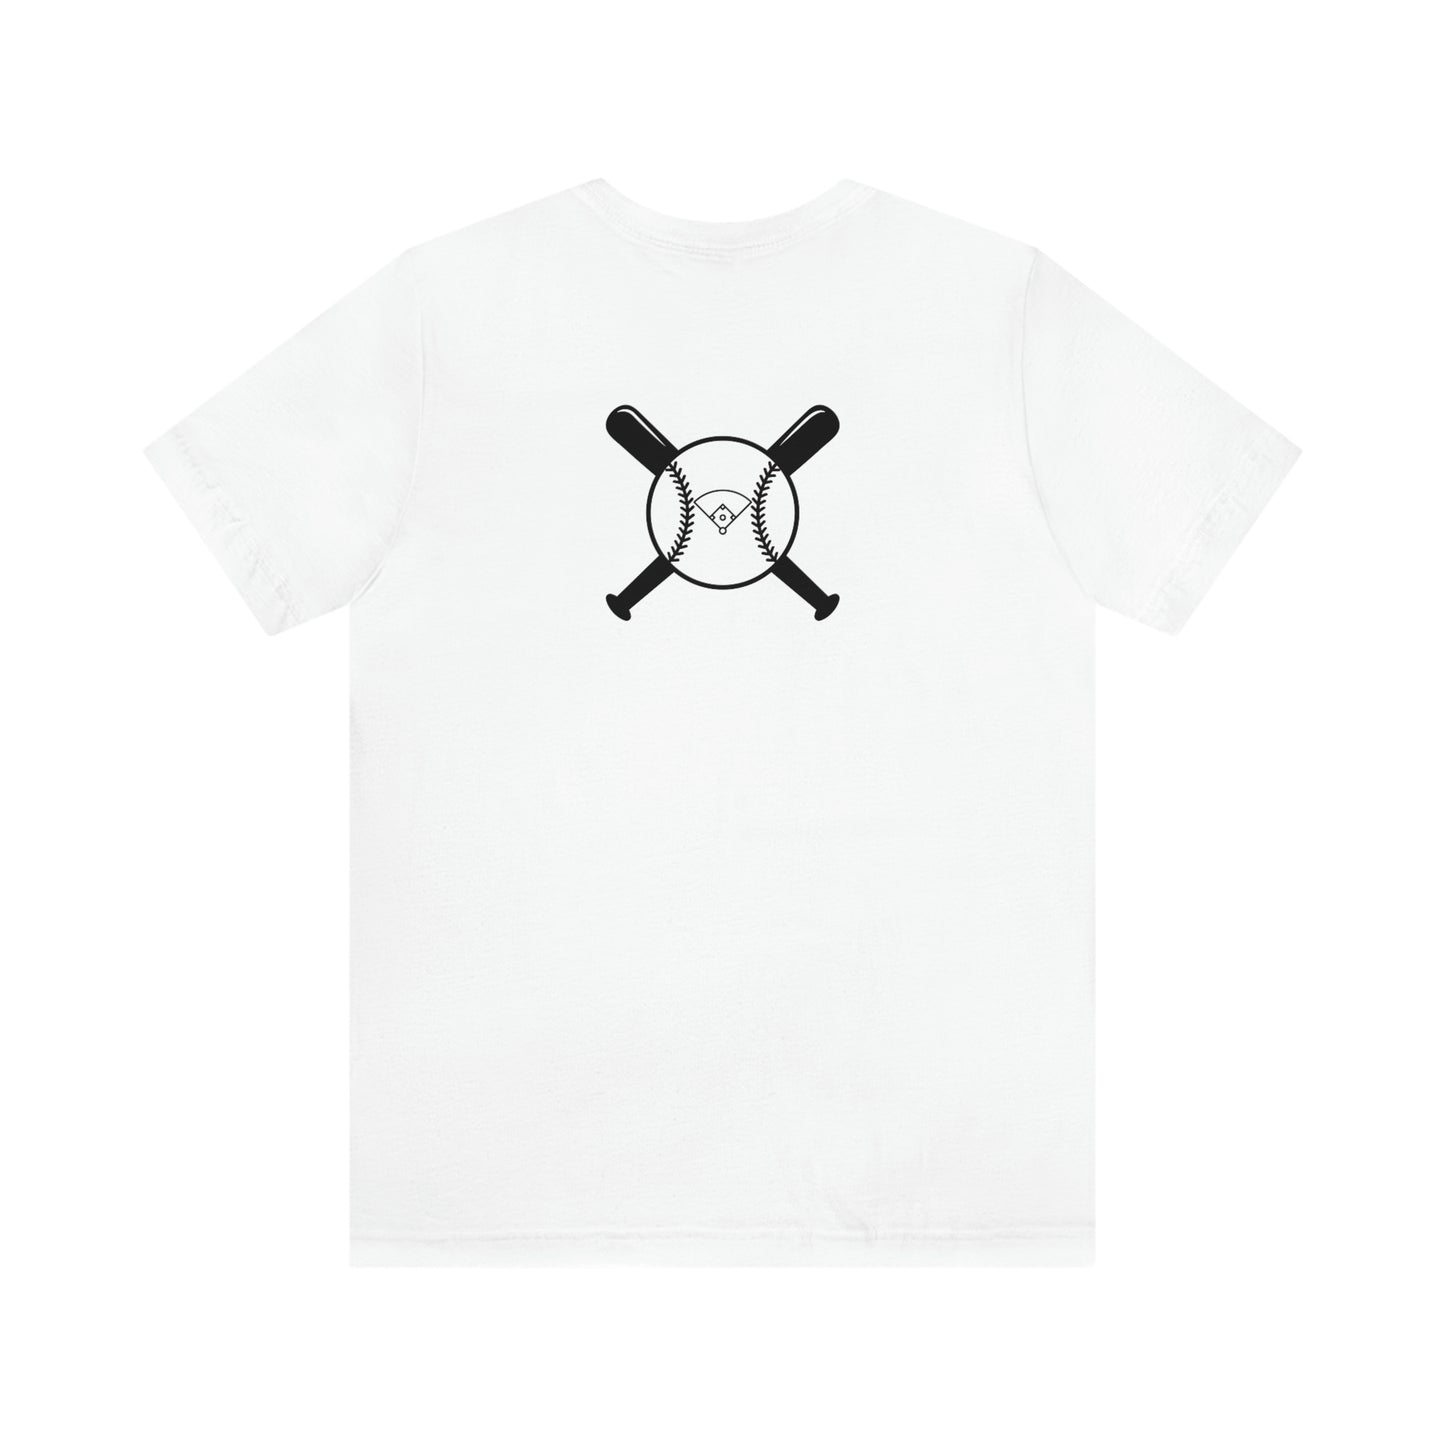 The “Baseball Mom” Unisex Jersey Short Sleeve T-Shirt